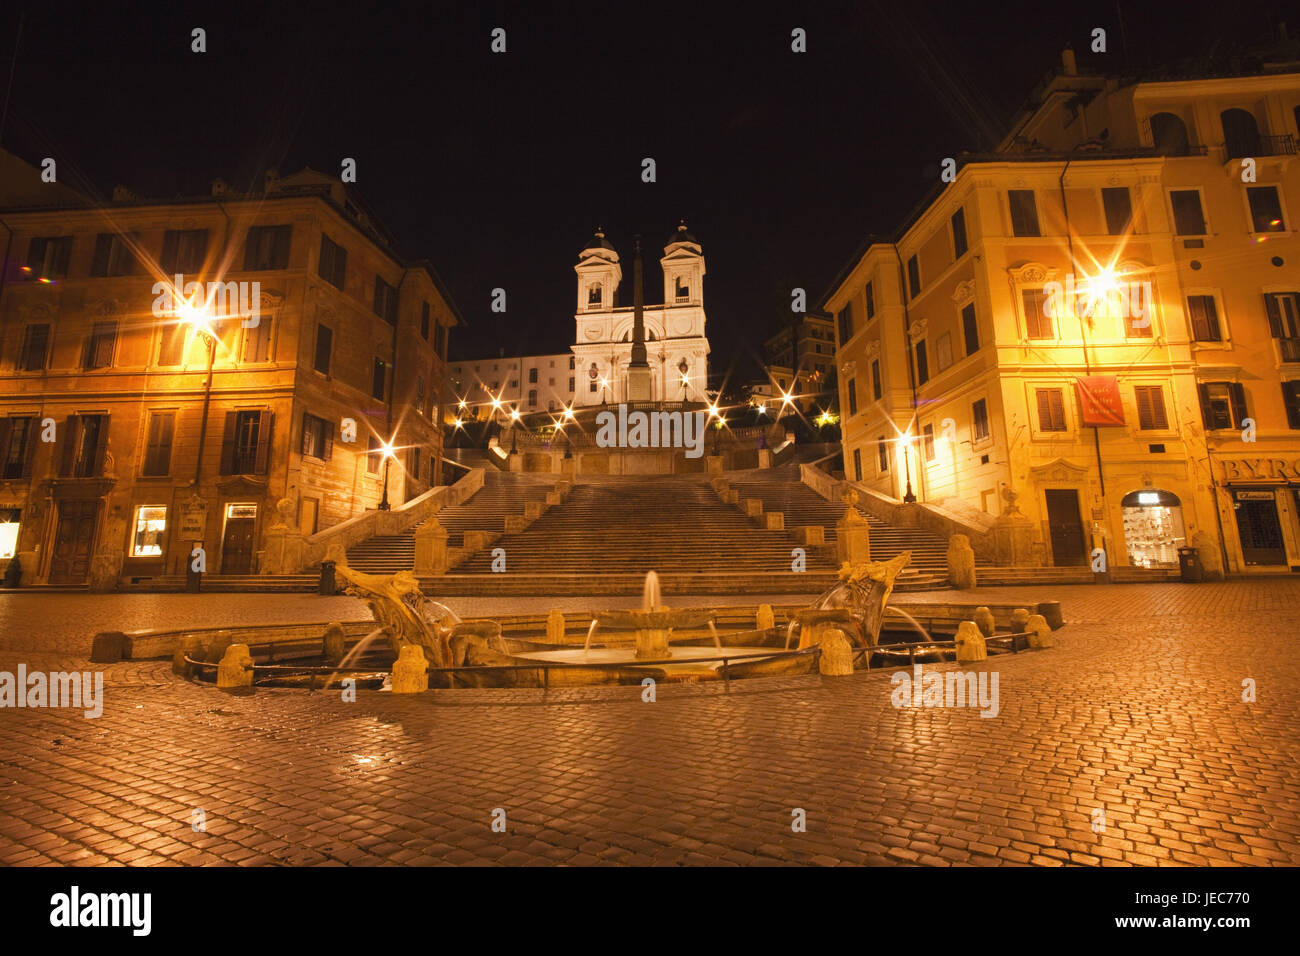 Italy, Rome, Piazza Tu Spagna, Fontana della Barcaccia, Spanish stairs and church Santa Trinita dei Monti, at night, Stock Photo